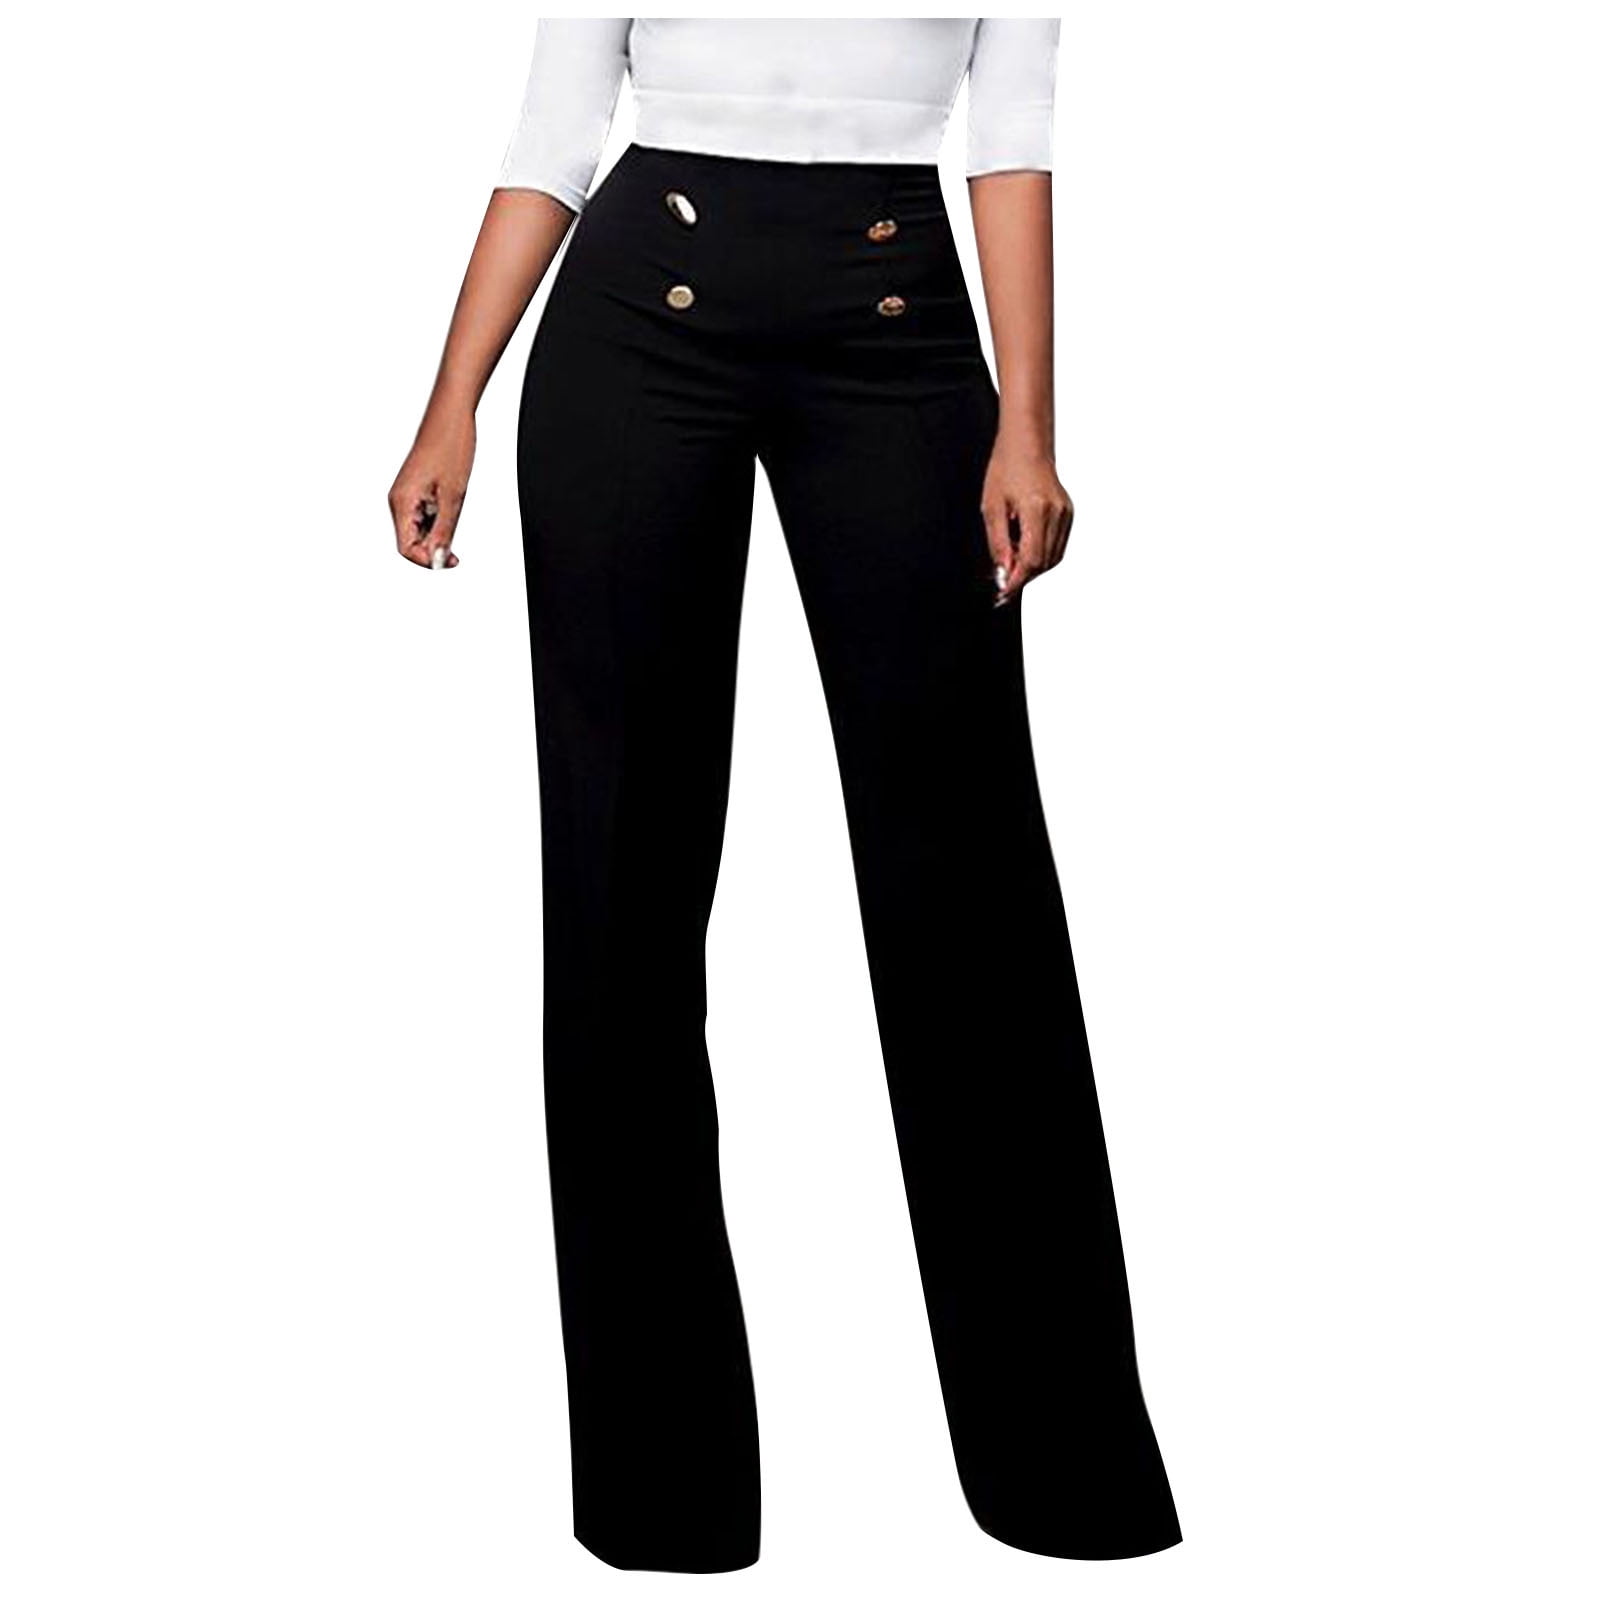 Myzora Regular Fit Women Black Trousers - Buy Myzora Regular Fit Women  Black Trousers Online at Best Prices in India | Flipkart.com